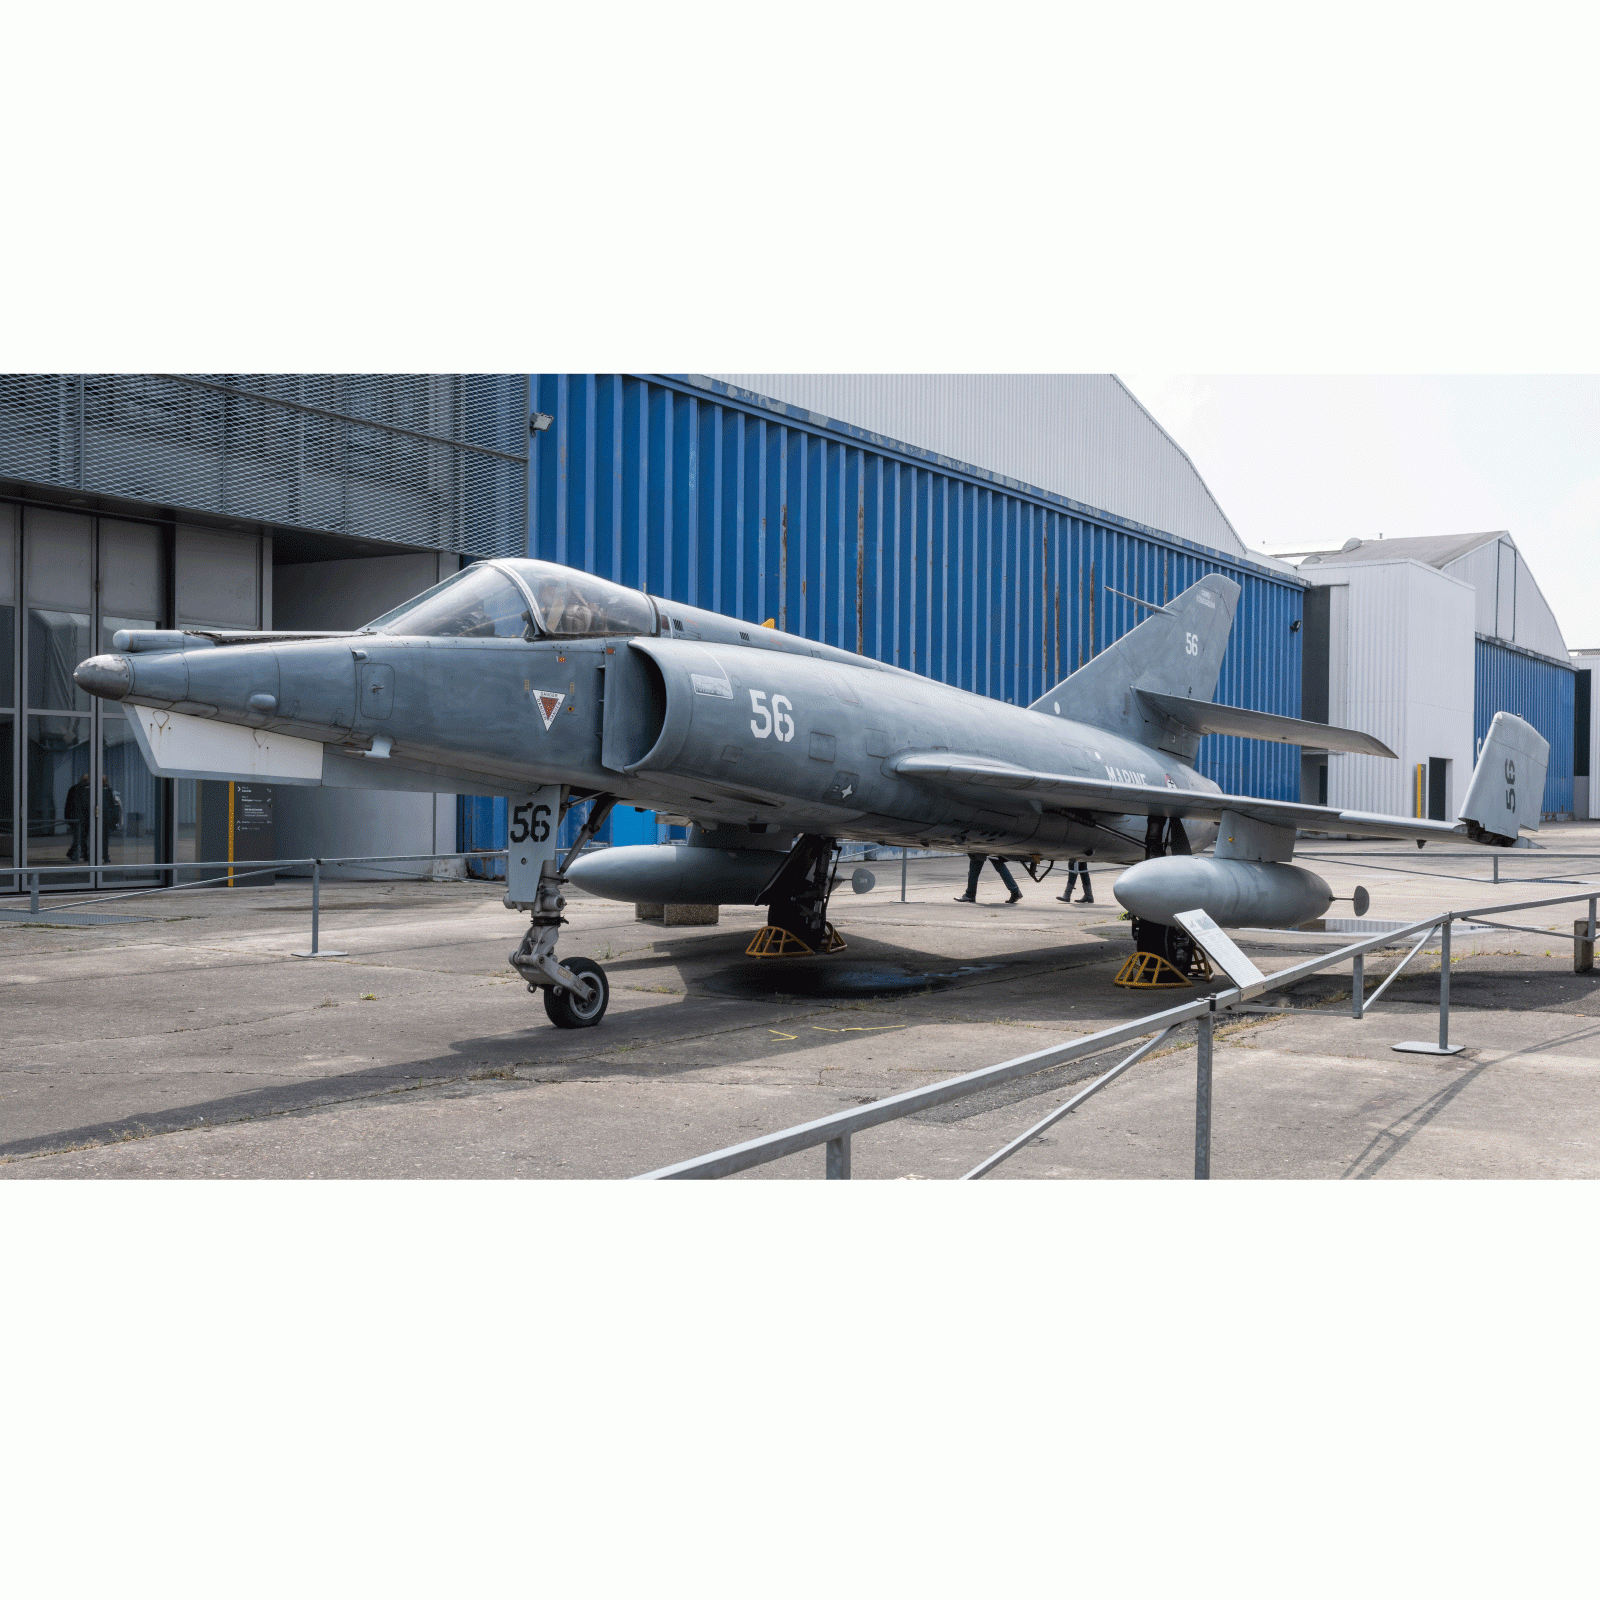 Dassault Etendard IVM – Aleks49 / Shutterstock